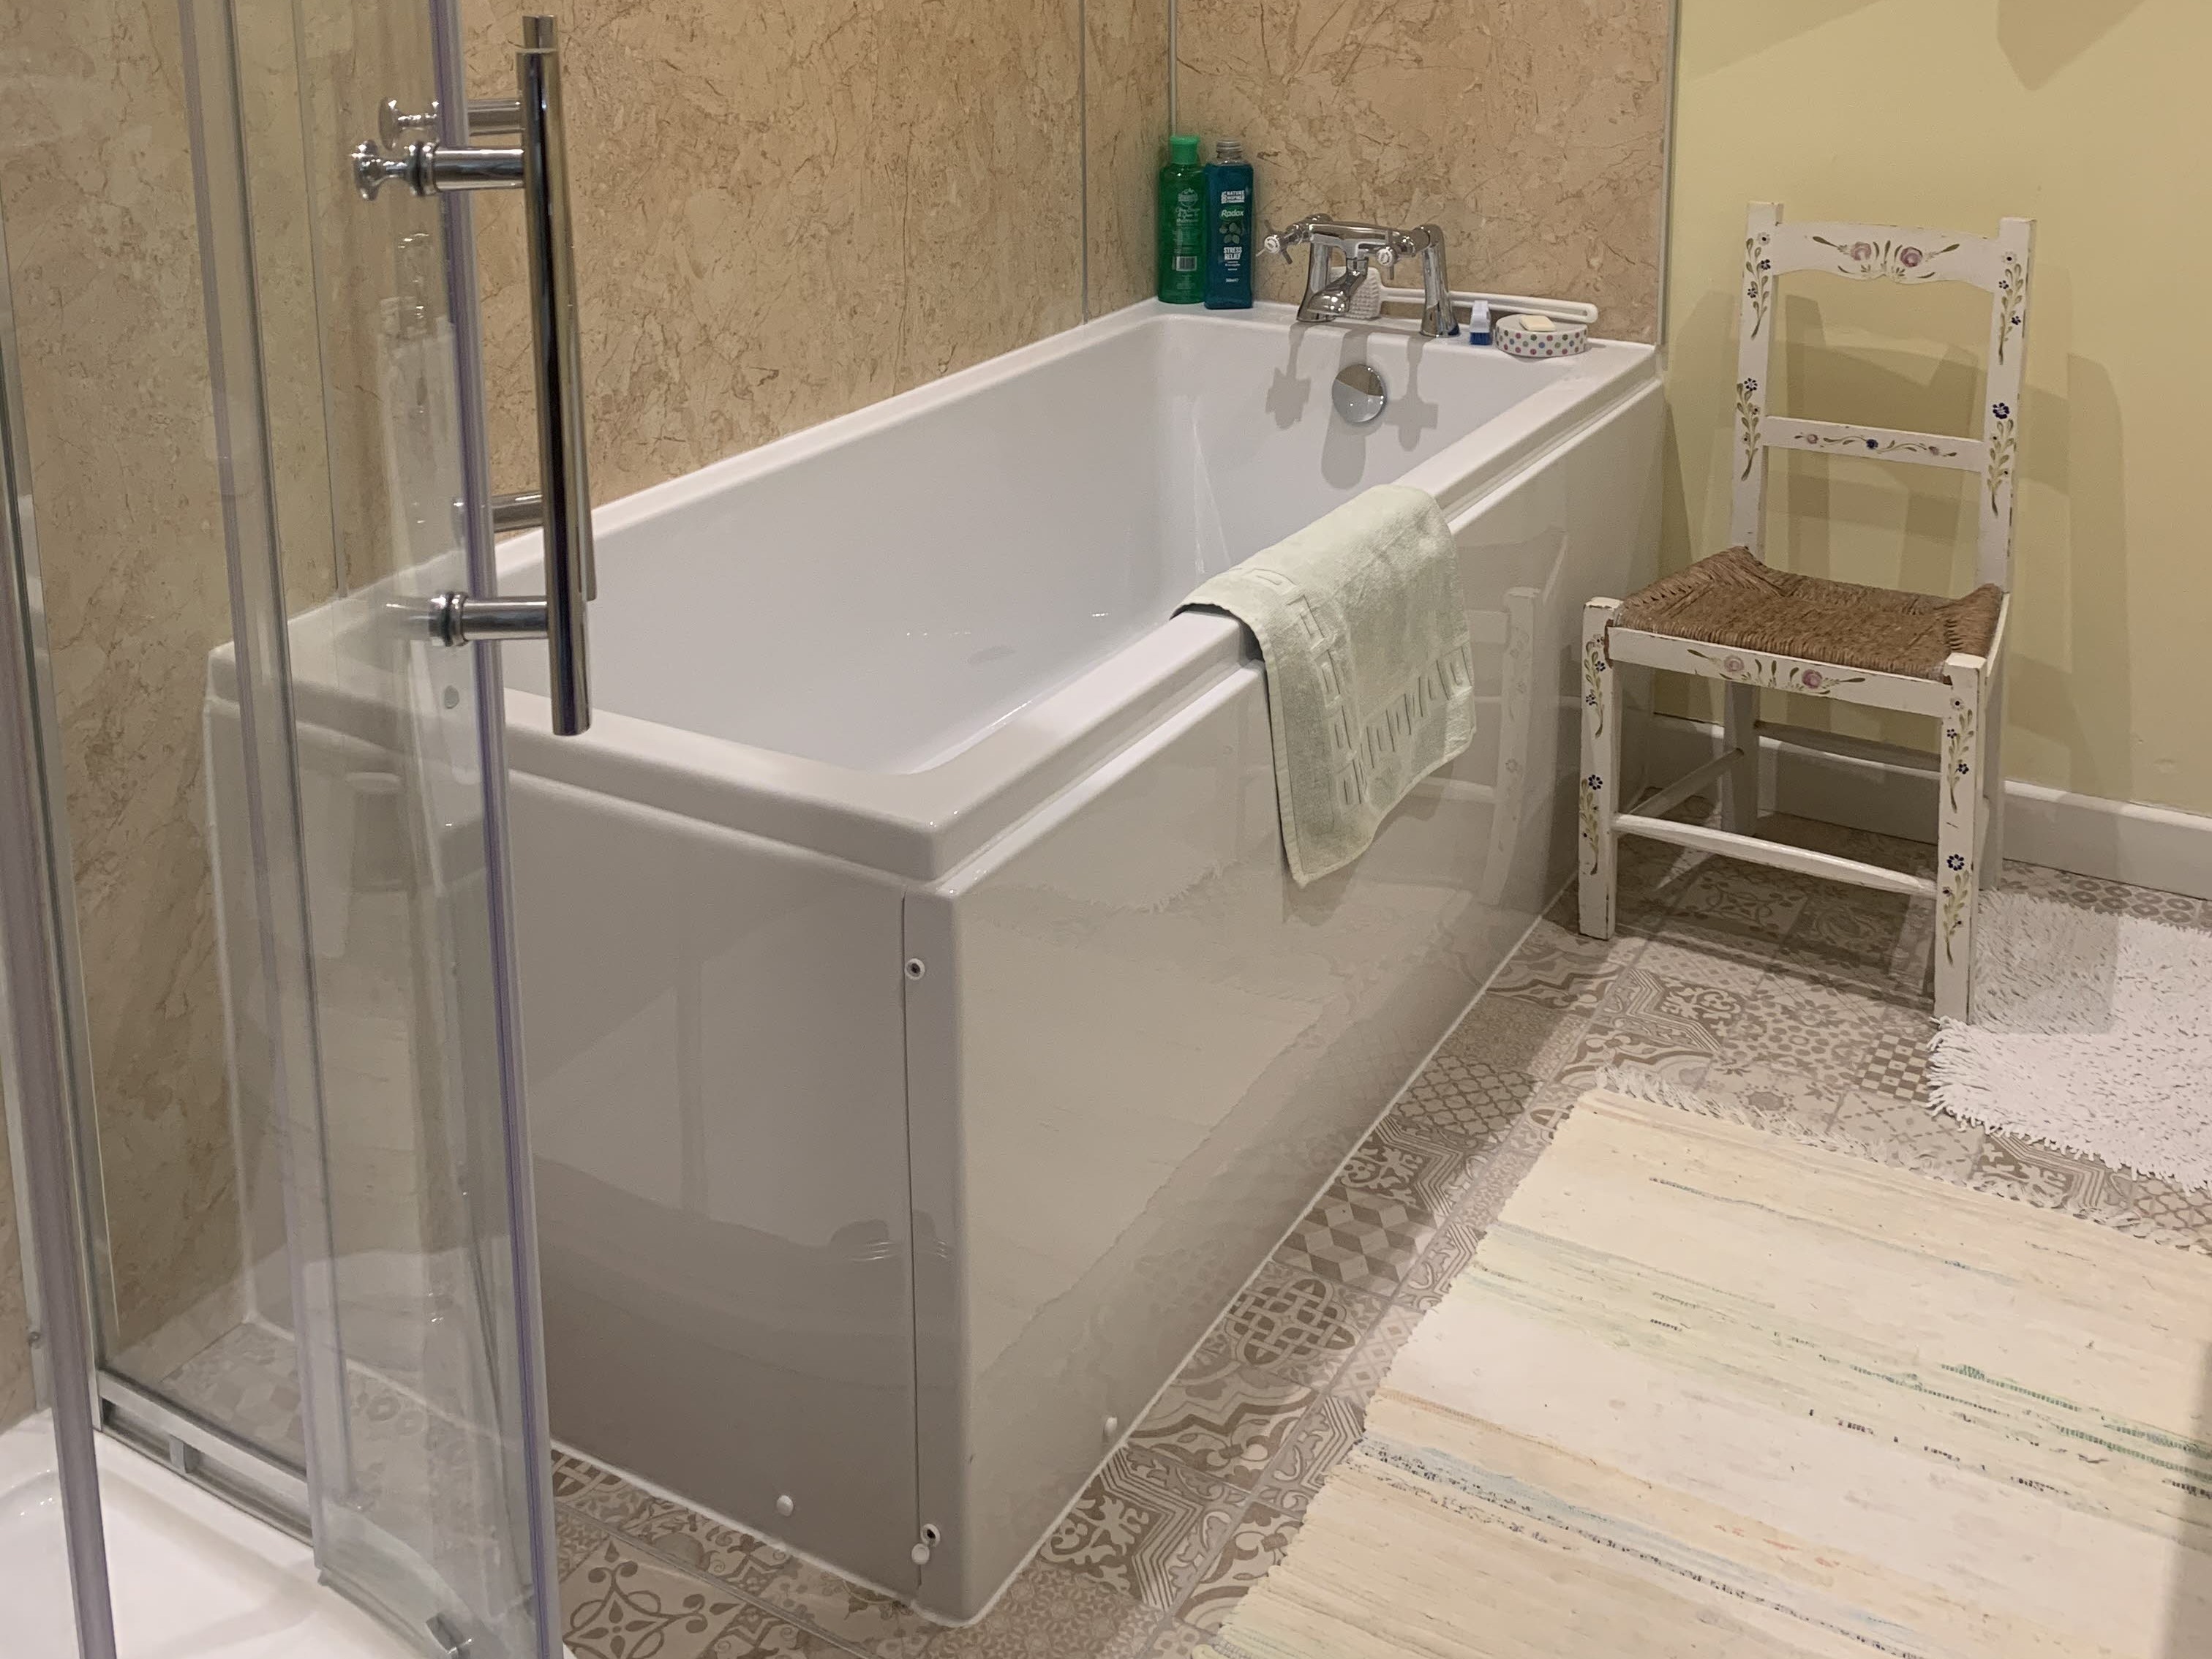 White bath tub, in a bathroom